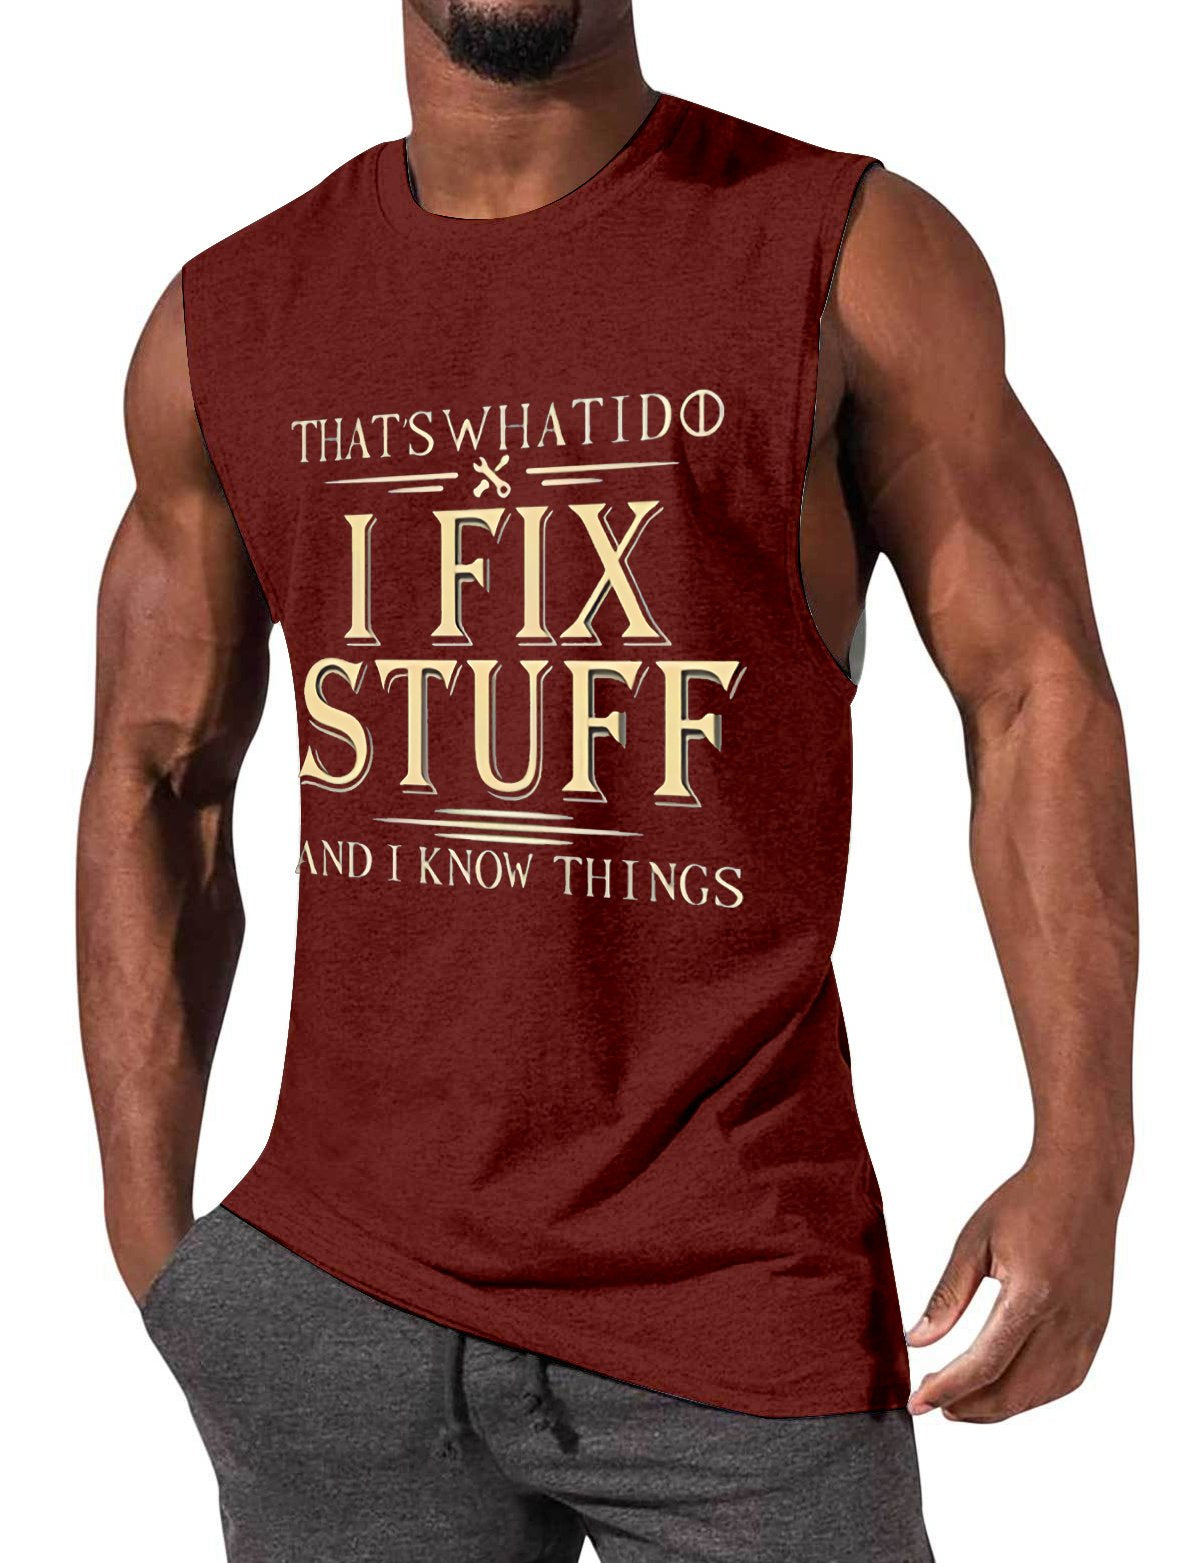 Men's casual fun text I FIX STUFF print sleeveless T-shirt